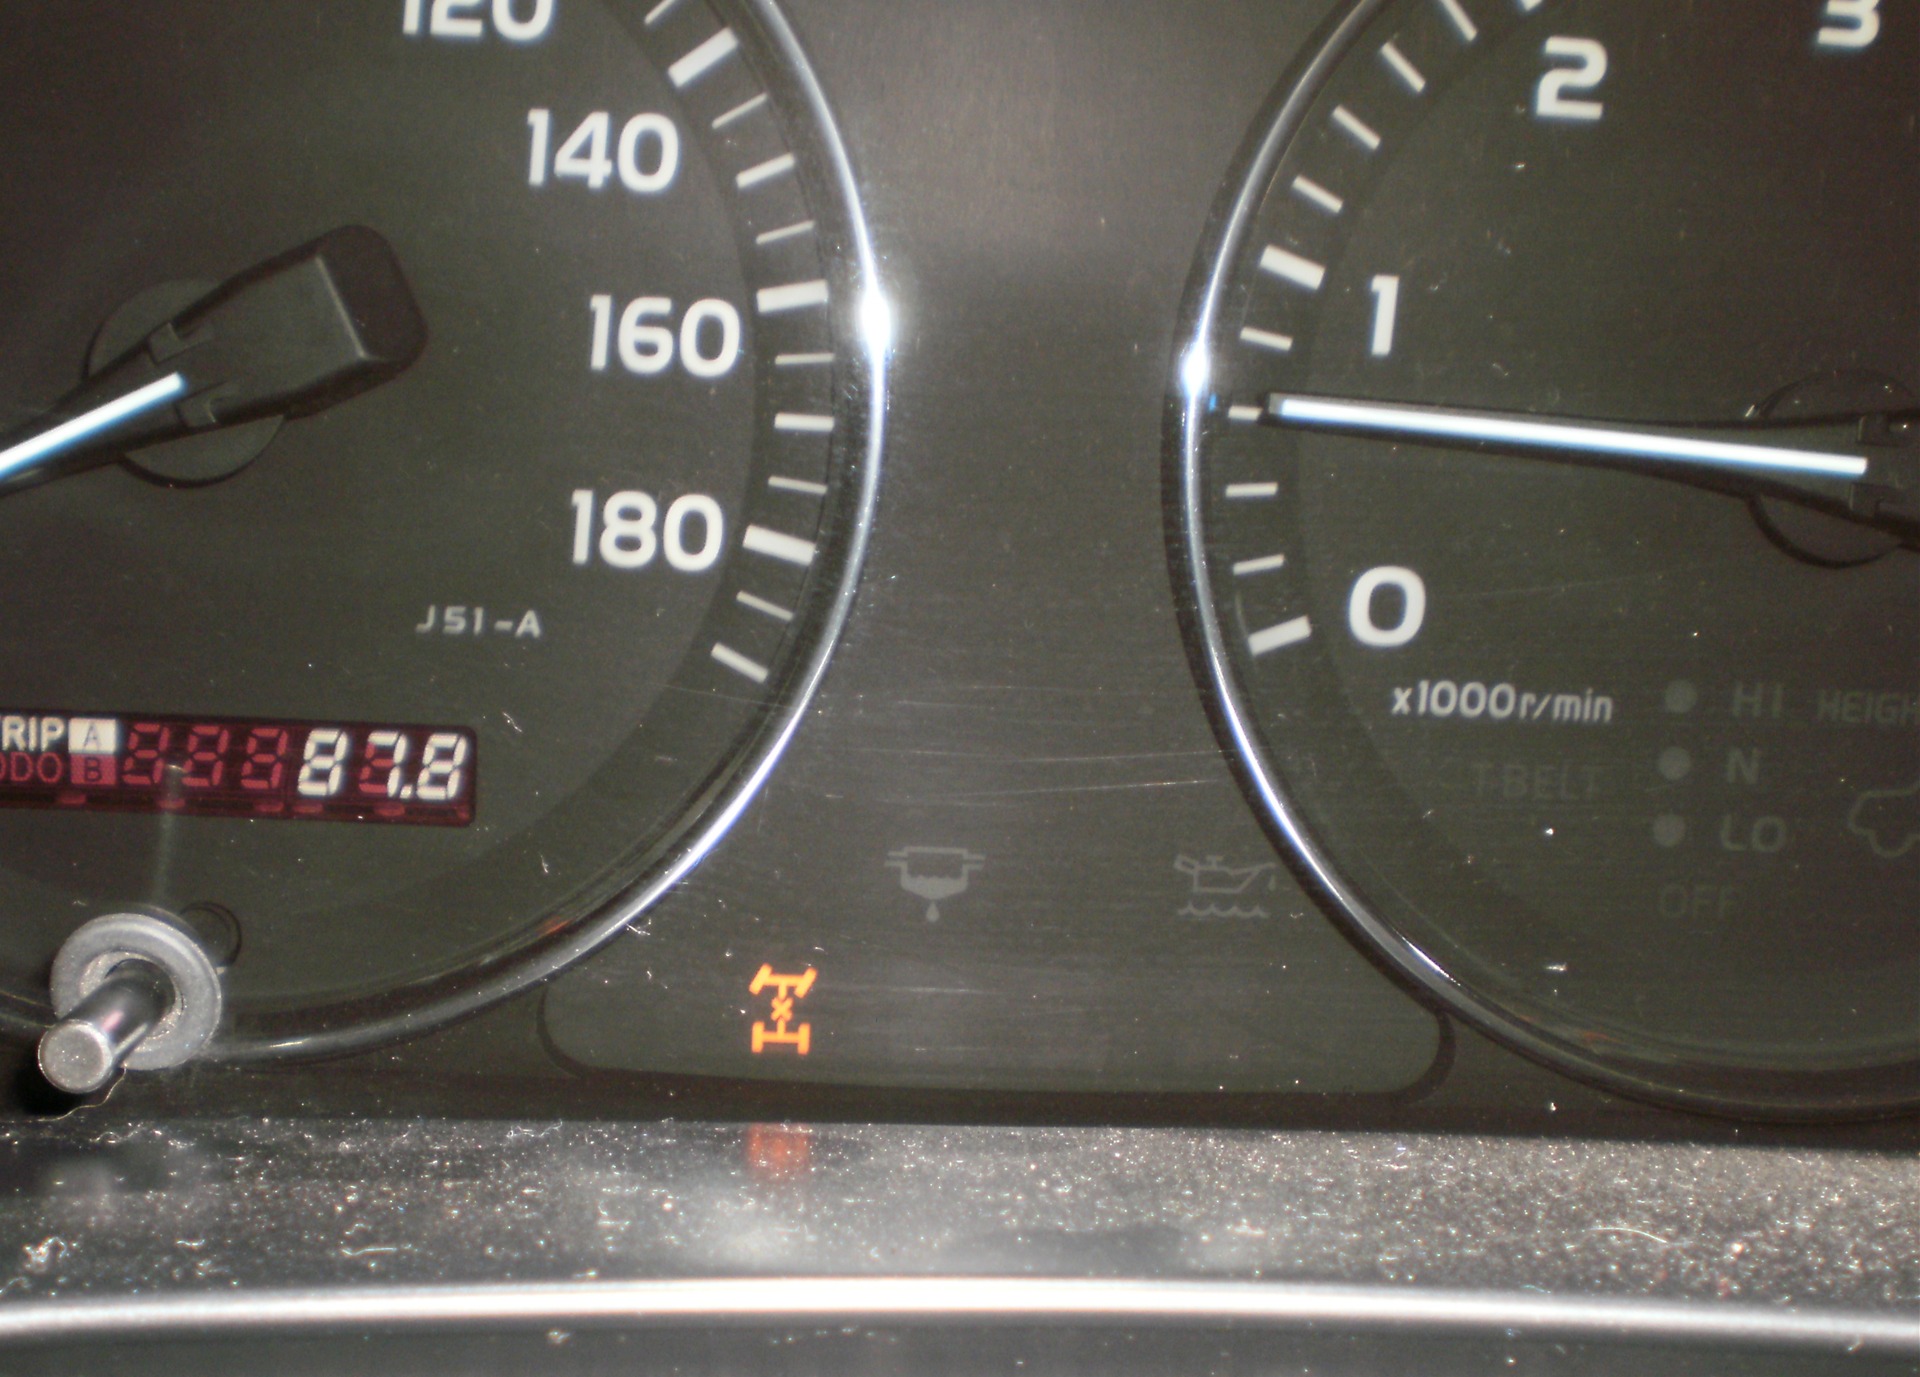    Toyota Land Cruiser 42 2007